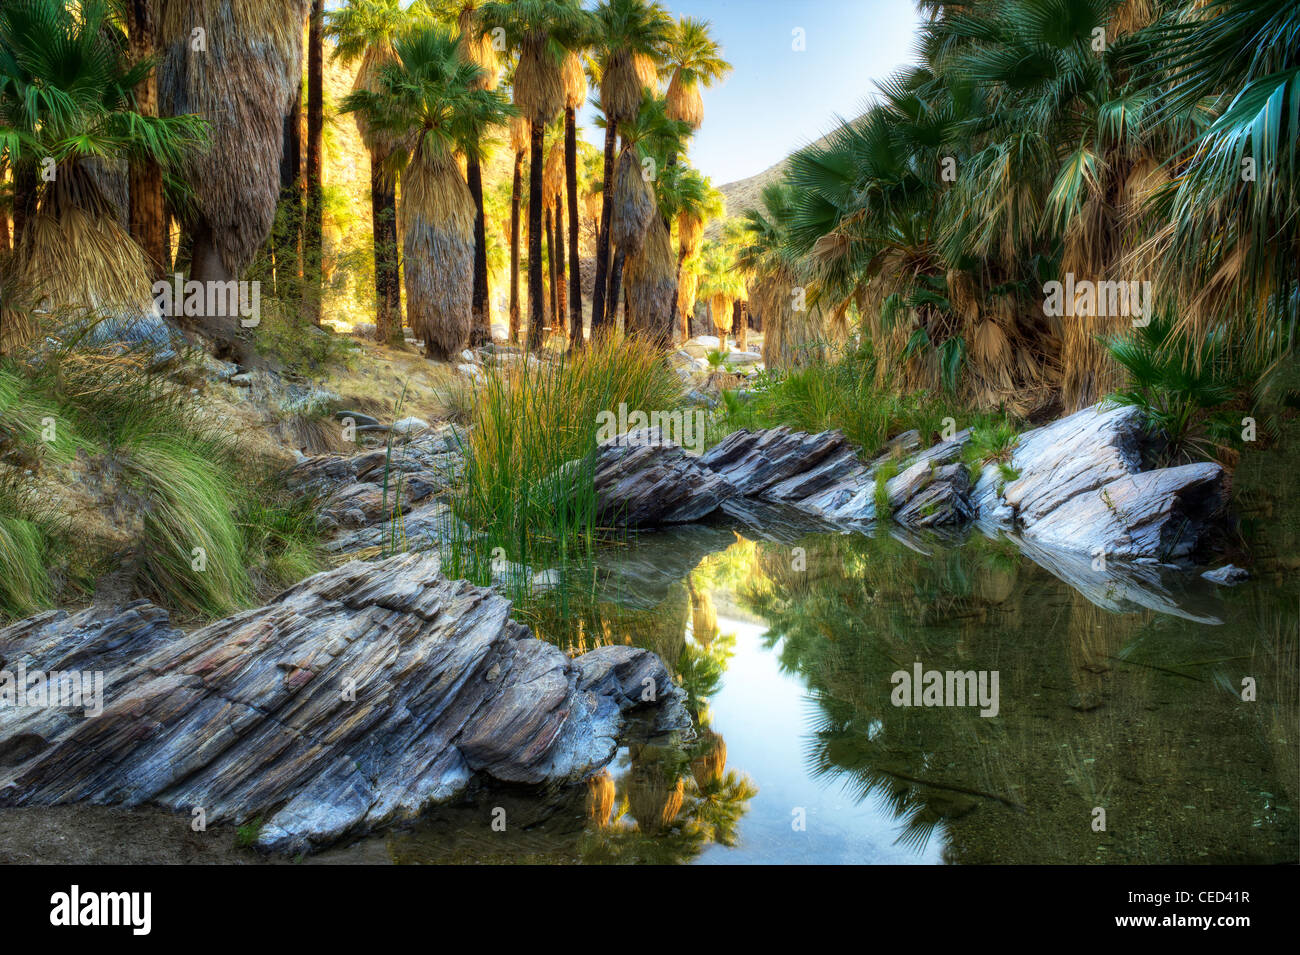 La riflessione nella forcella di West Palm Canyon Creek. Palm Canyon. Indian Canyon. Palm Springs, California. Foto Stock